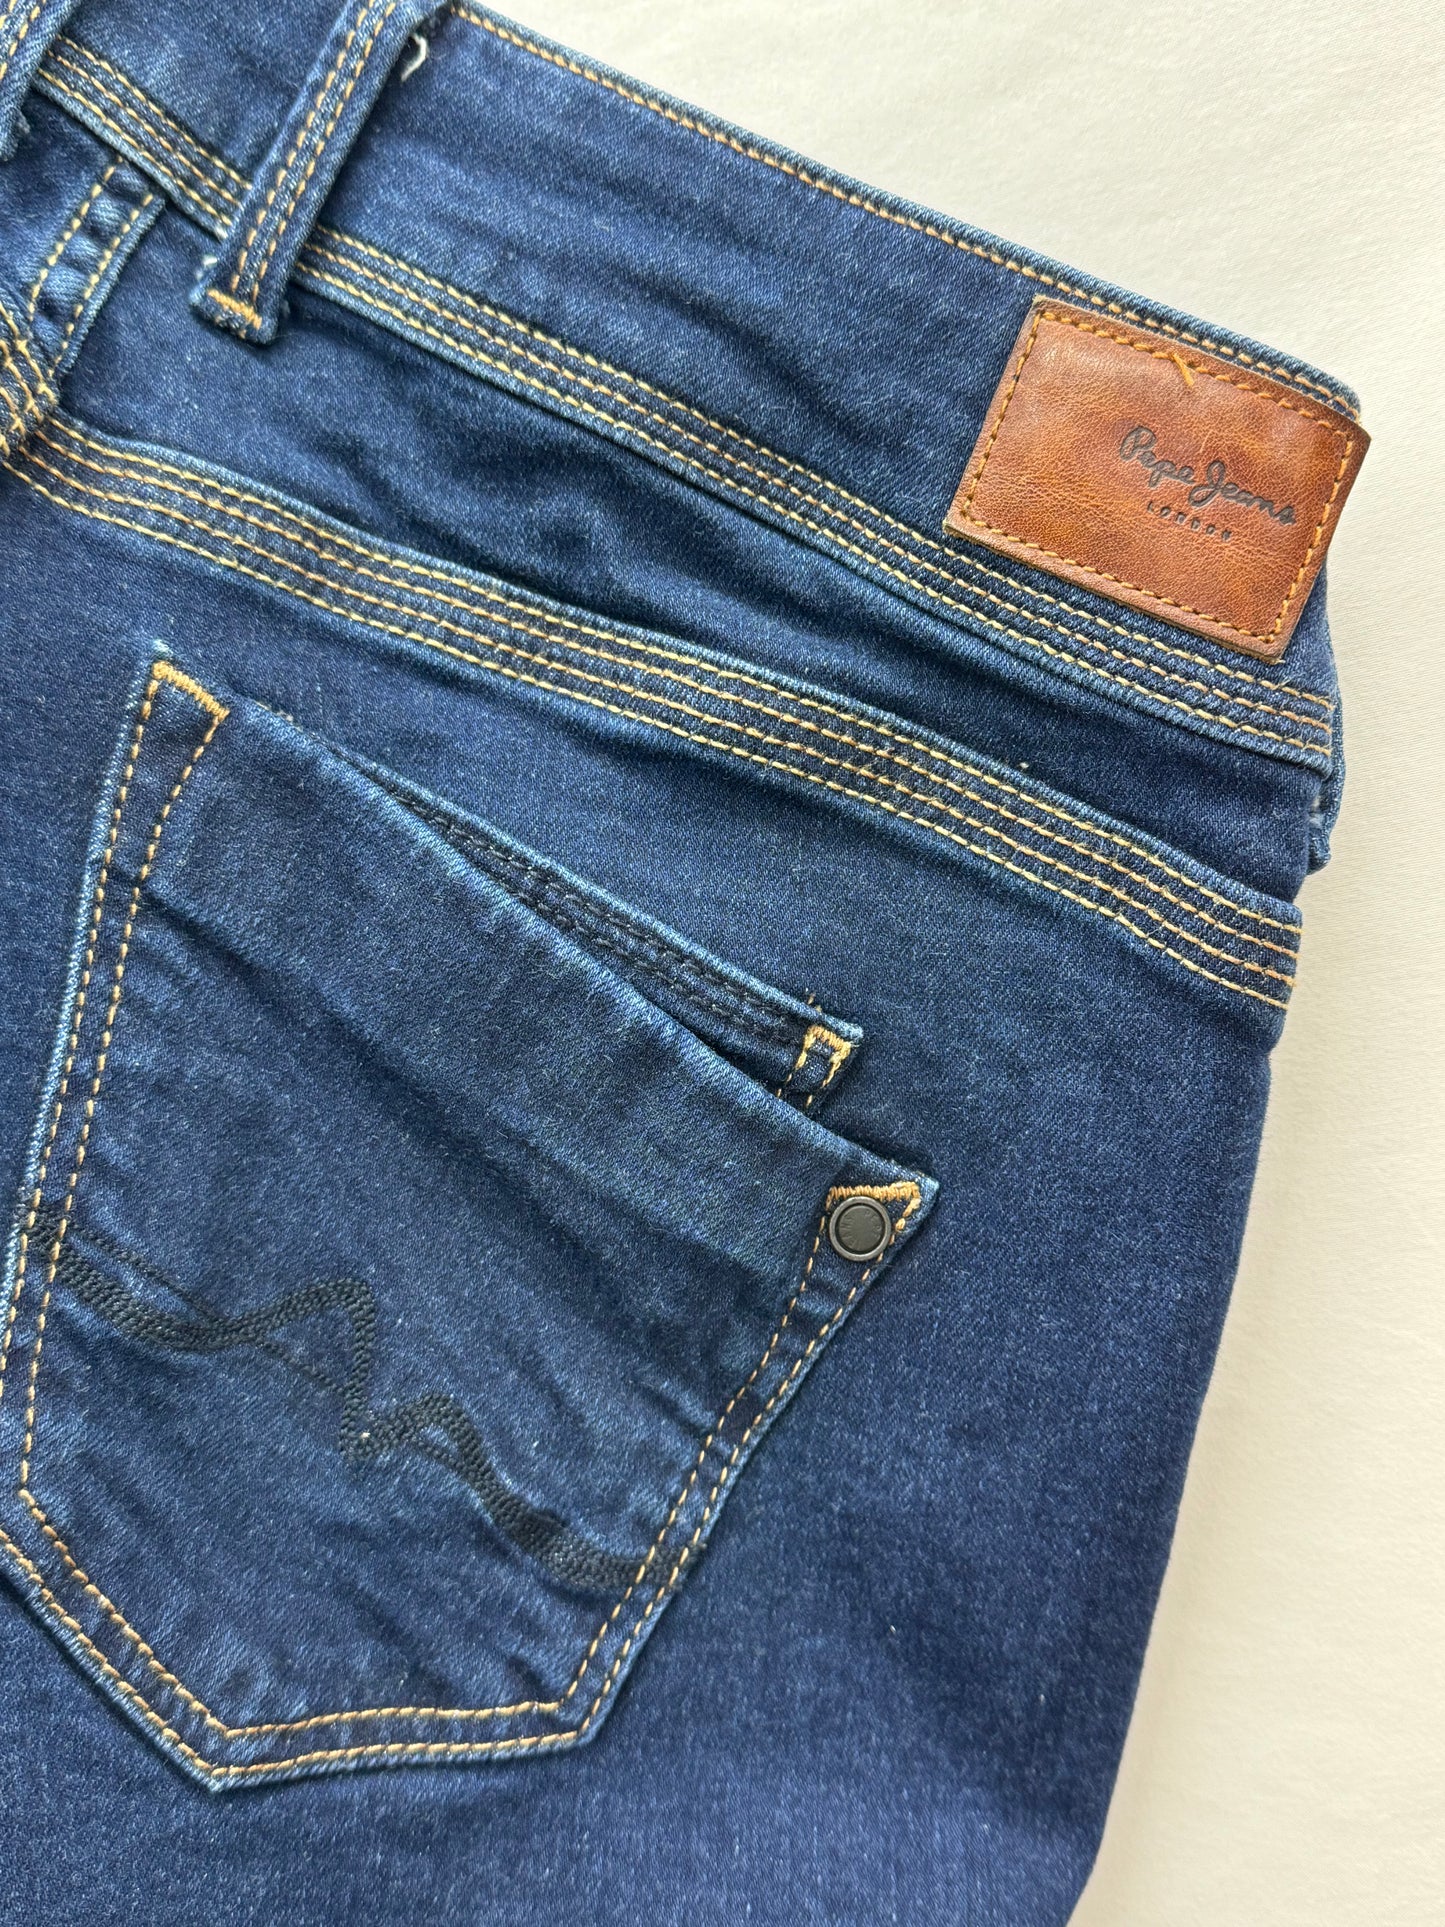 Pepe Jeans London Men's Jeans Blue - Size W28 x L34